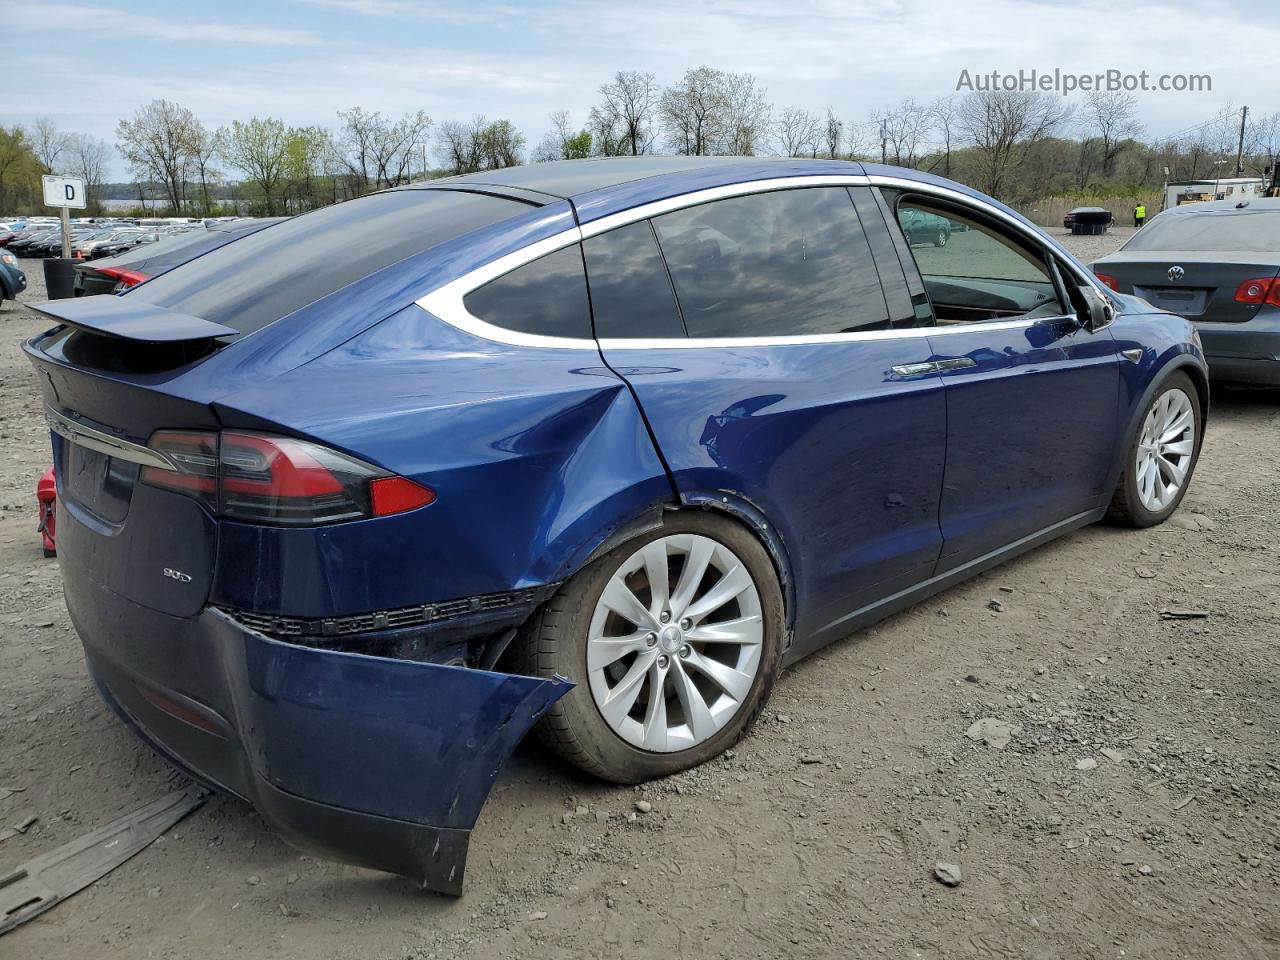 2016 Tesla Model X  Blue vin: 5YJXCBE2XGF007254